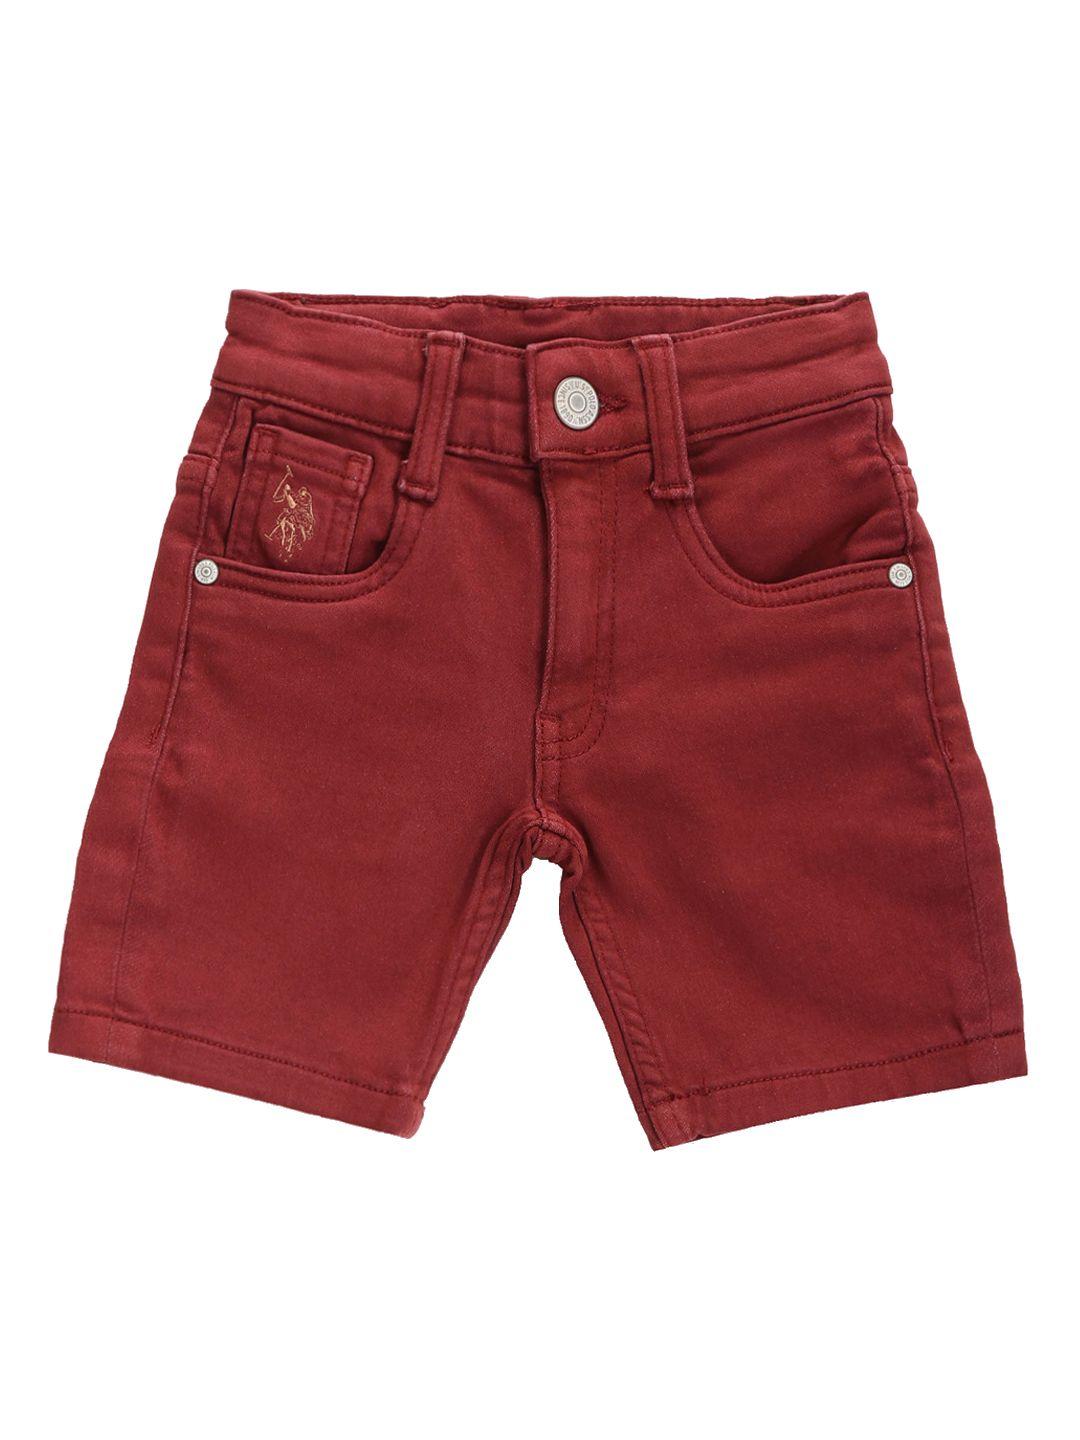 u.s. polo assn. kids boys mid rise cotton denim shorts